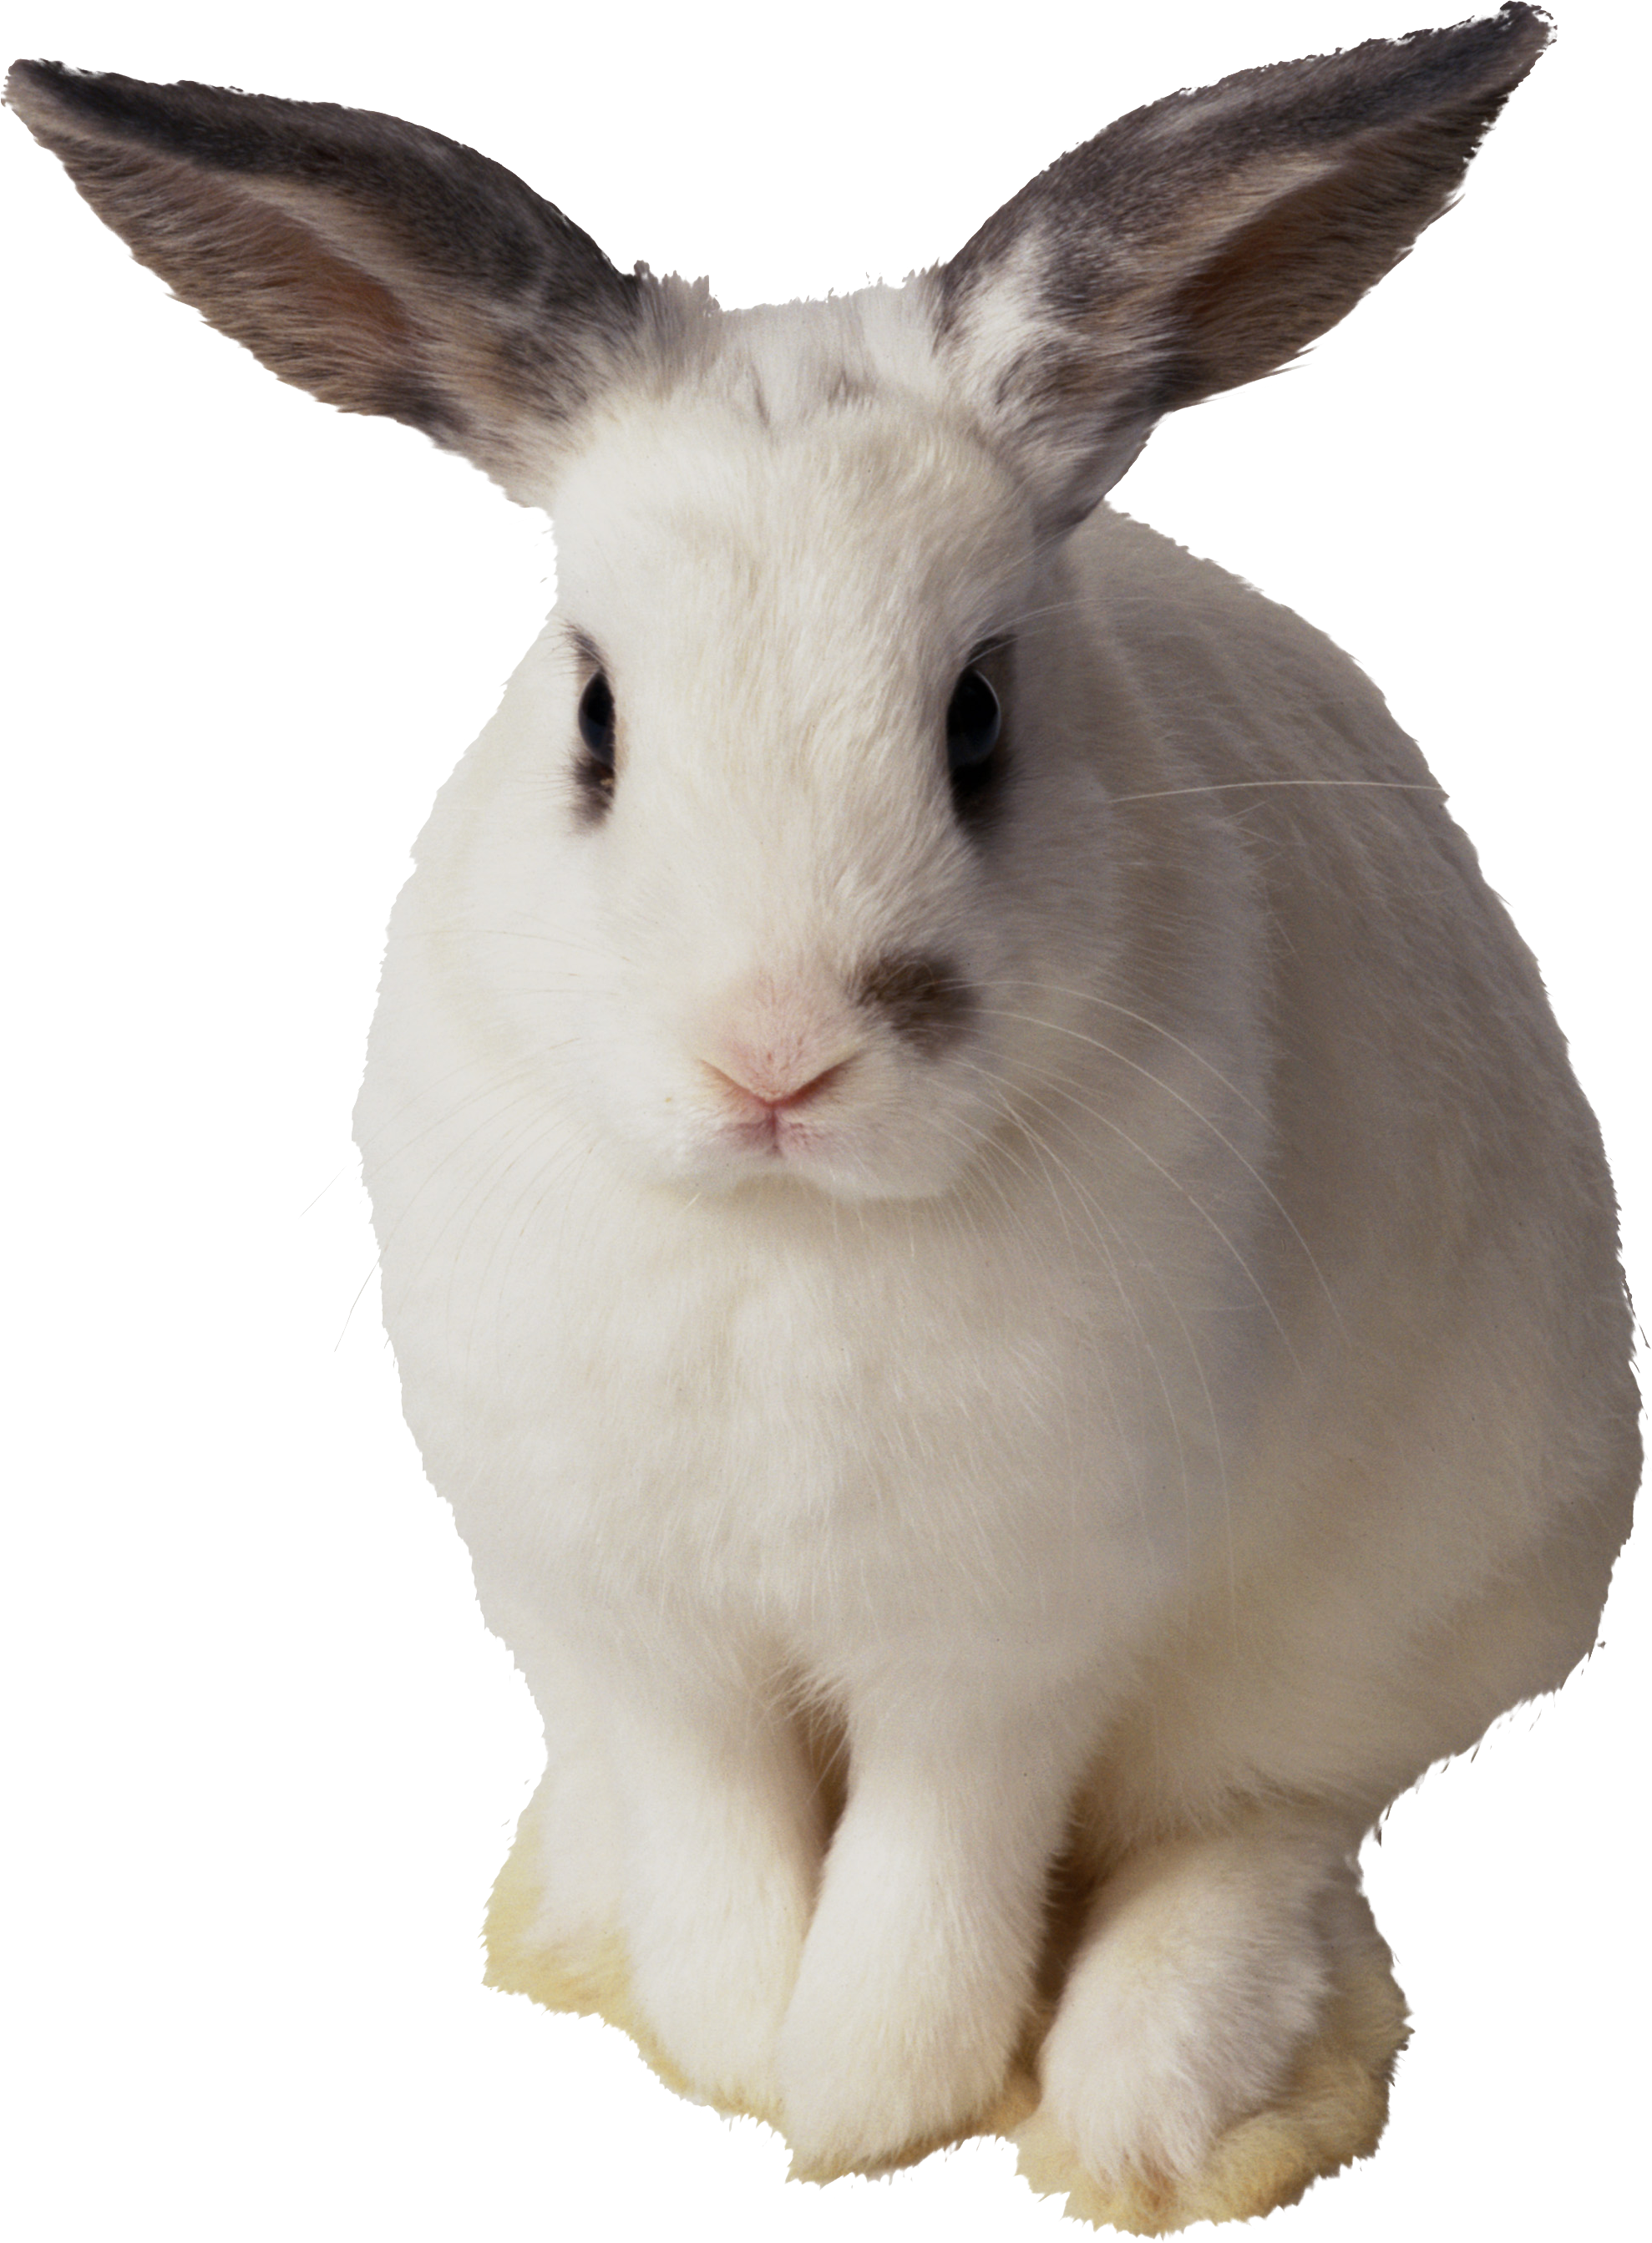 सफेद खरगोश